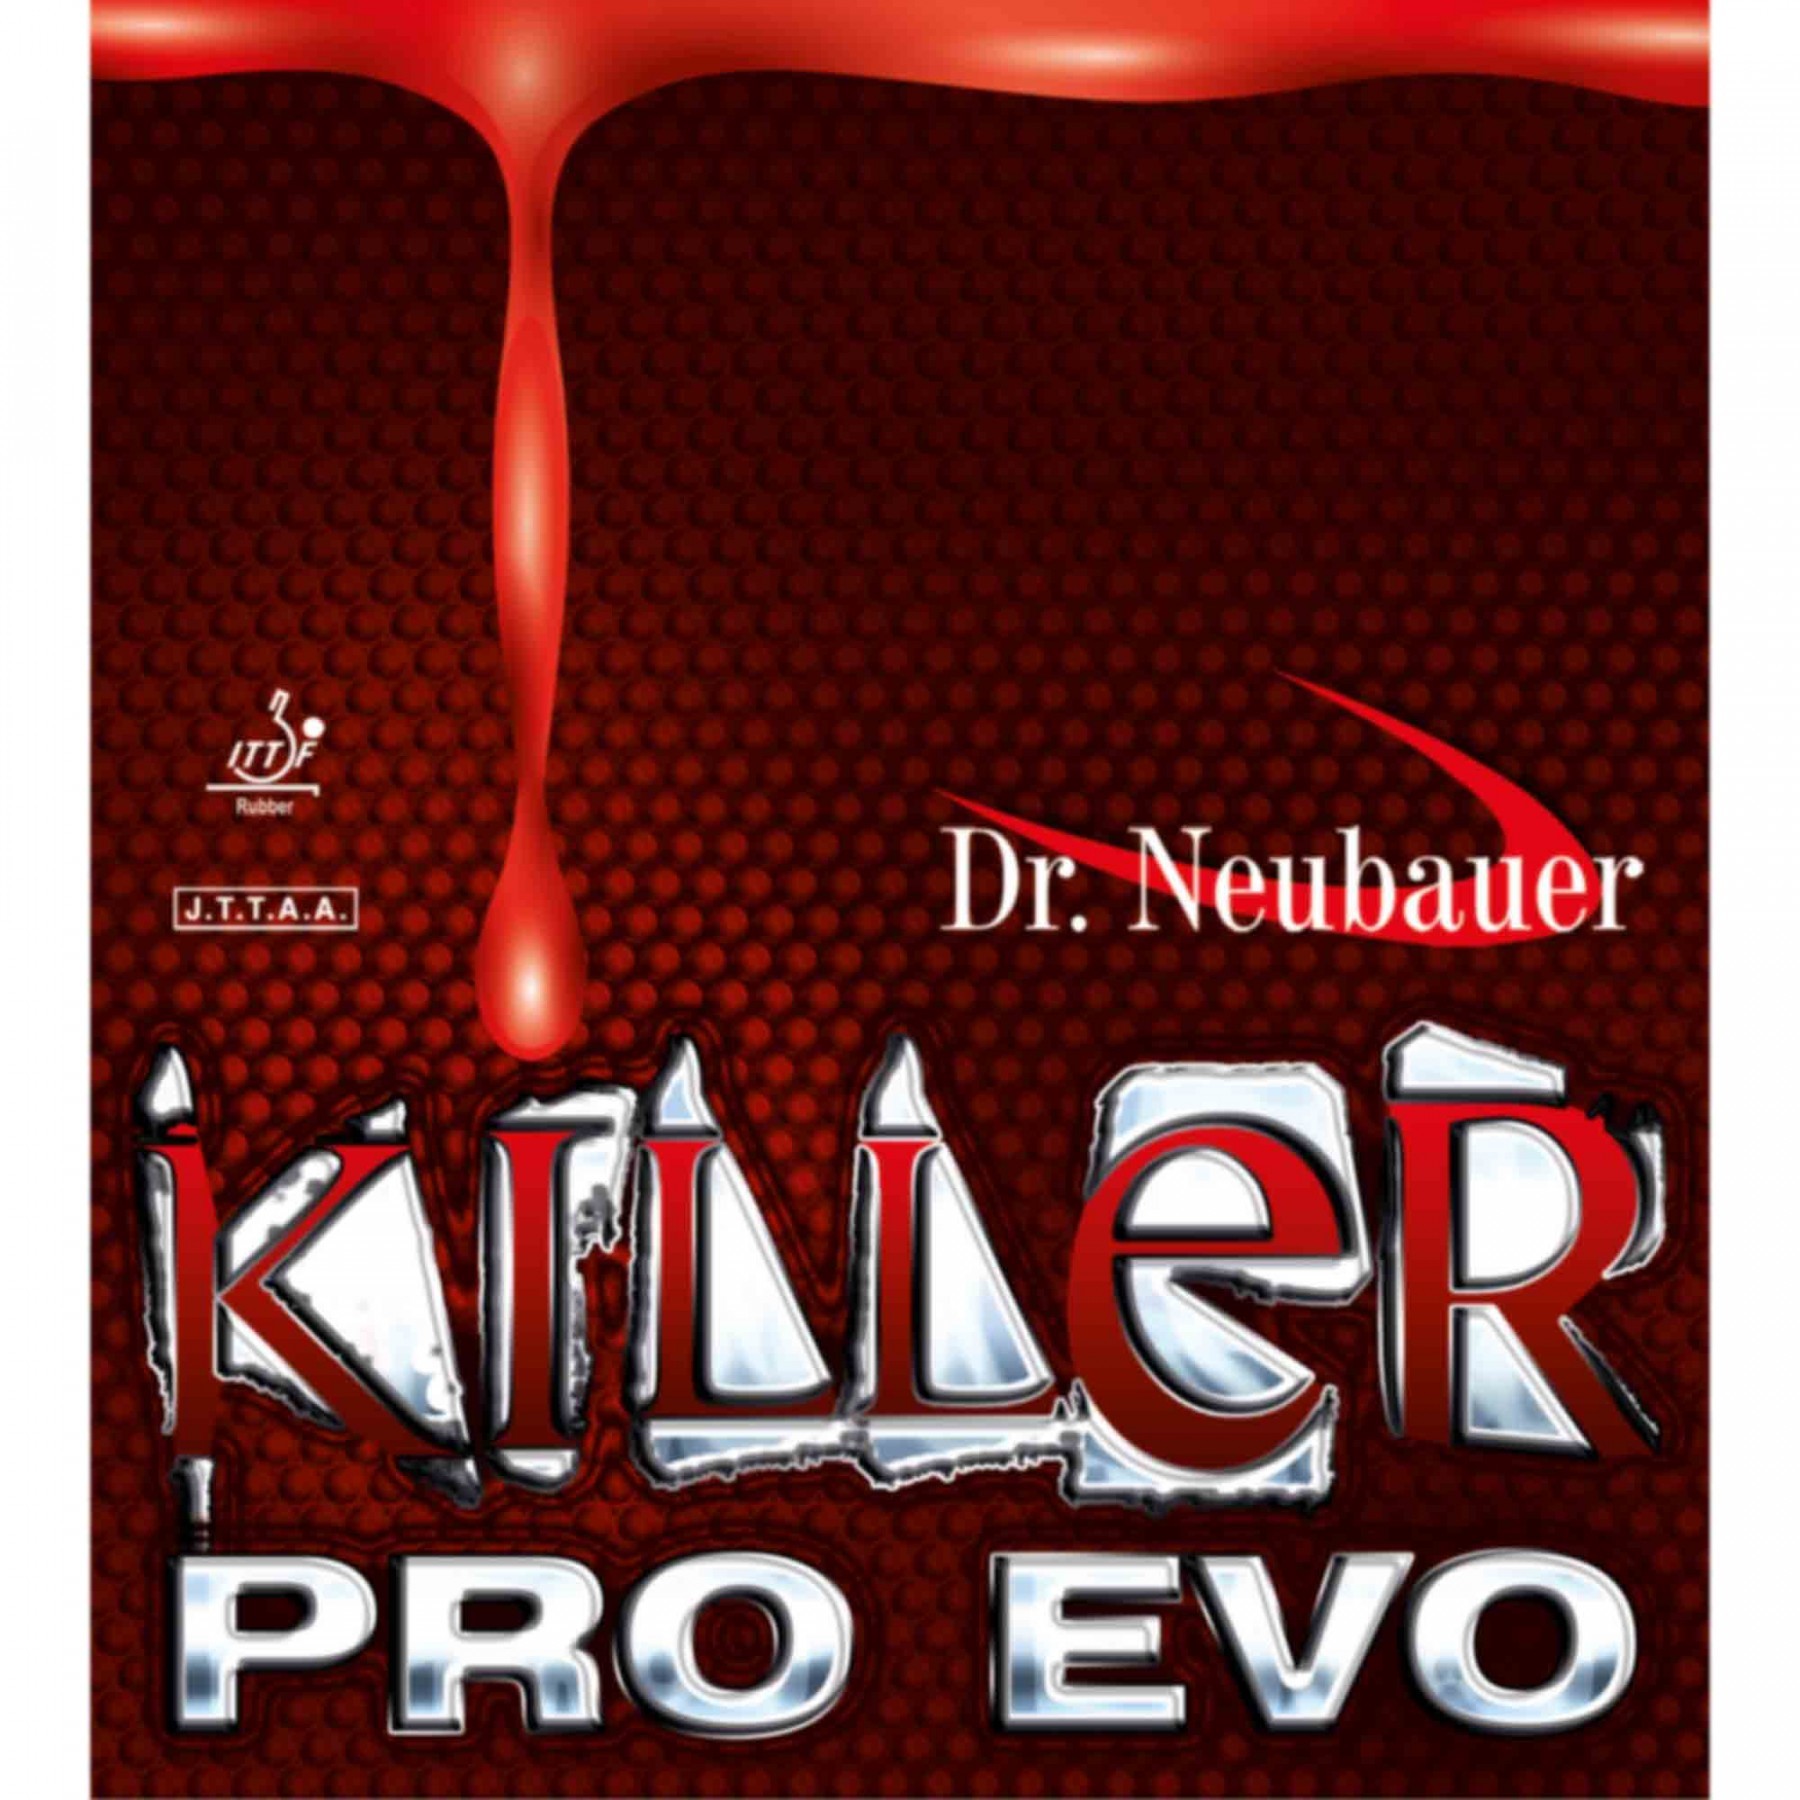 Killer pro. Накладка Dr. Neubauer Killer. Killer Pro Dr Neubauer. Dr Neubauer накладки. Накладки +для настольного тенниса Dr Neubauer.